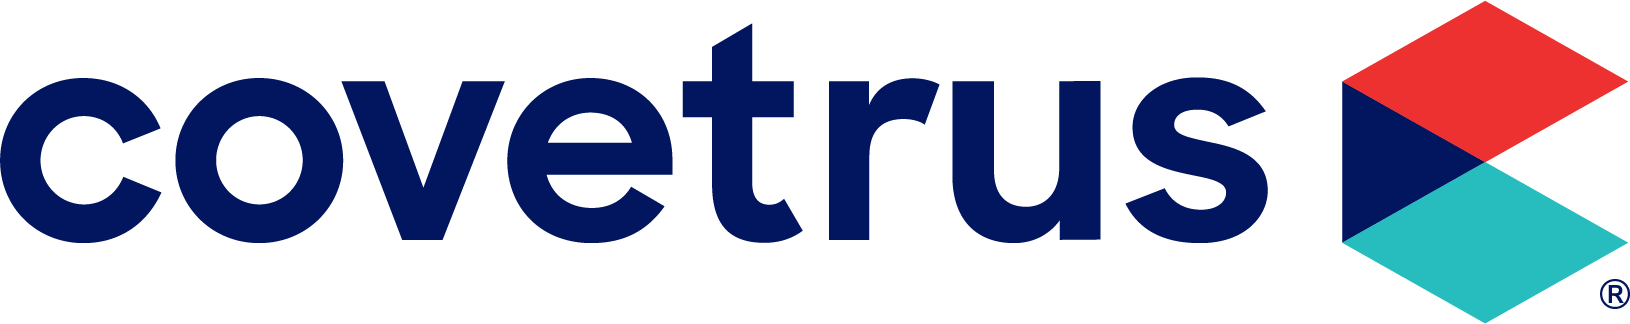 Covetrus company logo